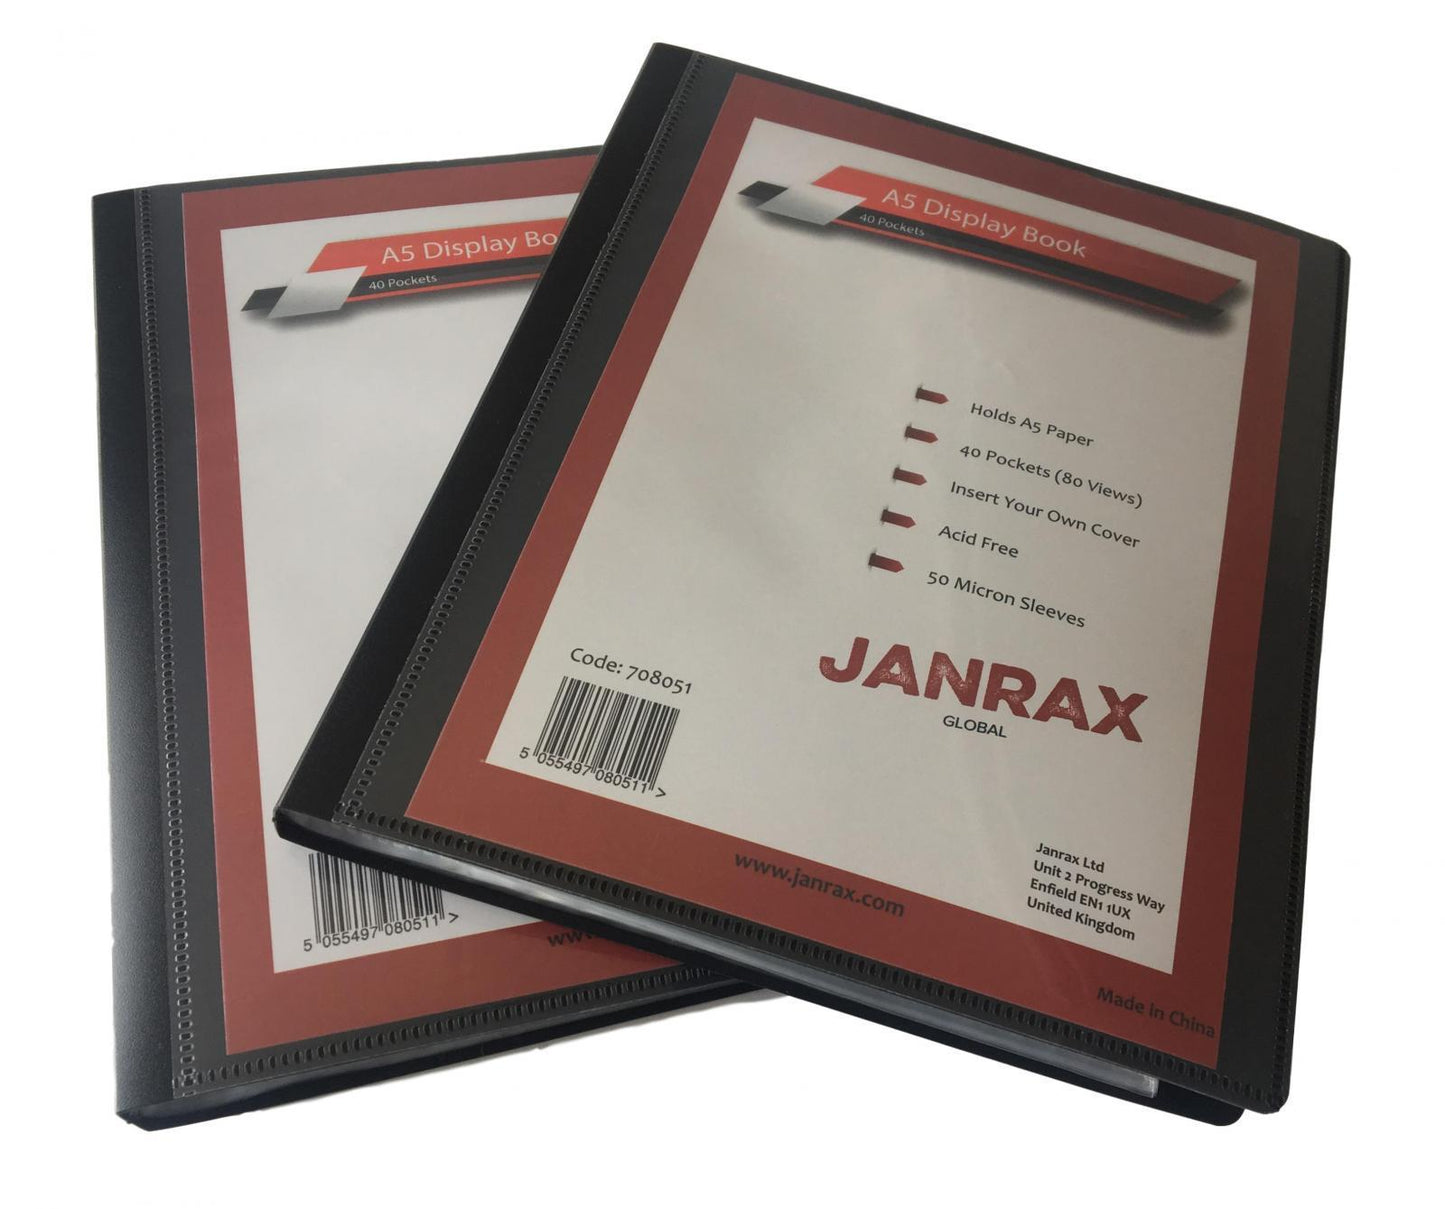 Janrax A5 Display Book 40 Pockets (80 Views)